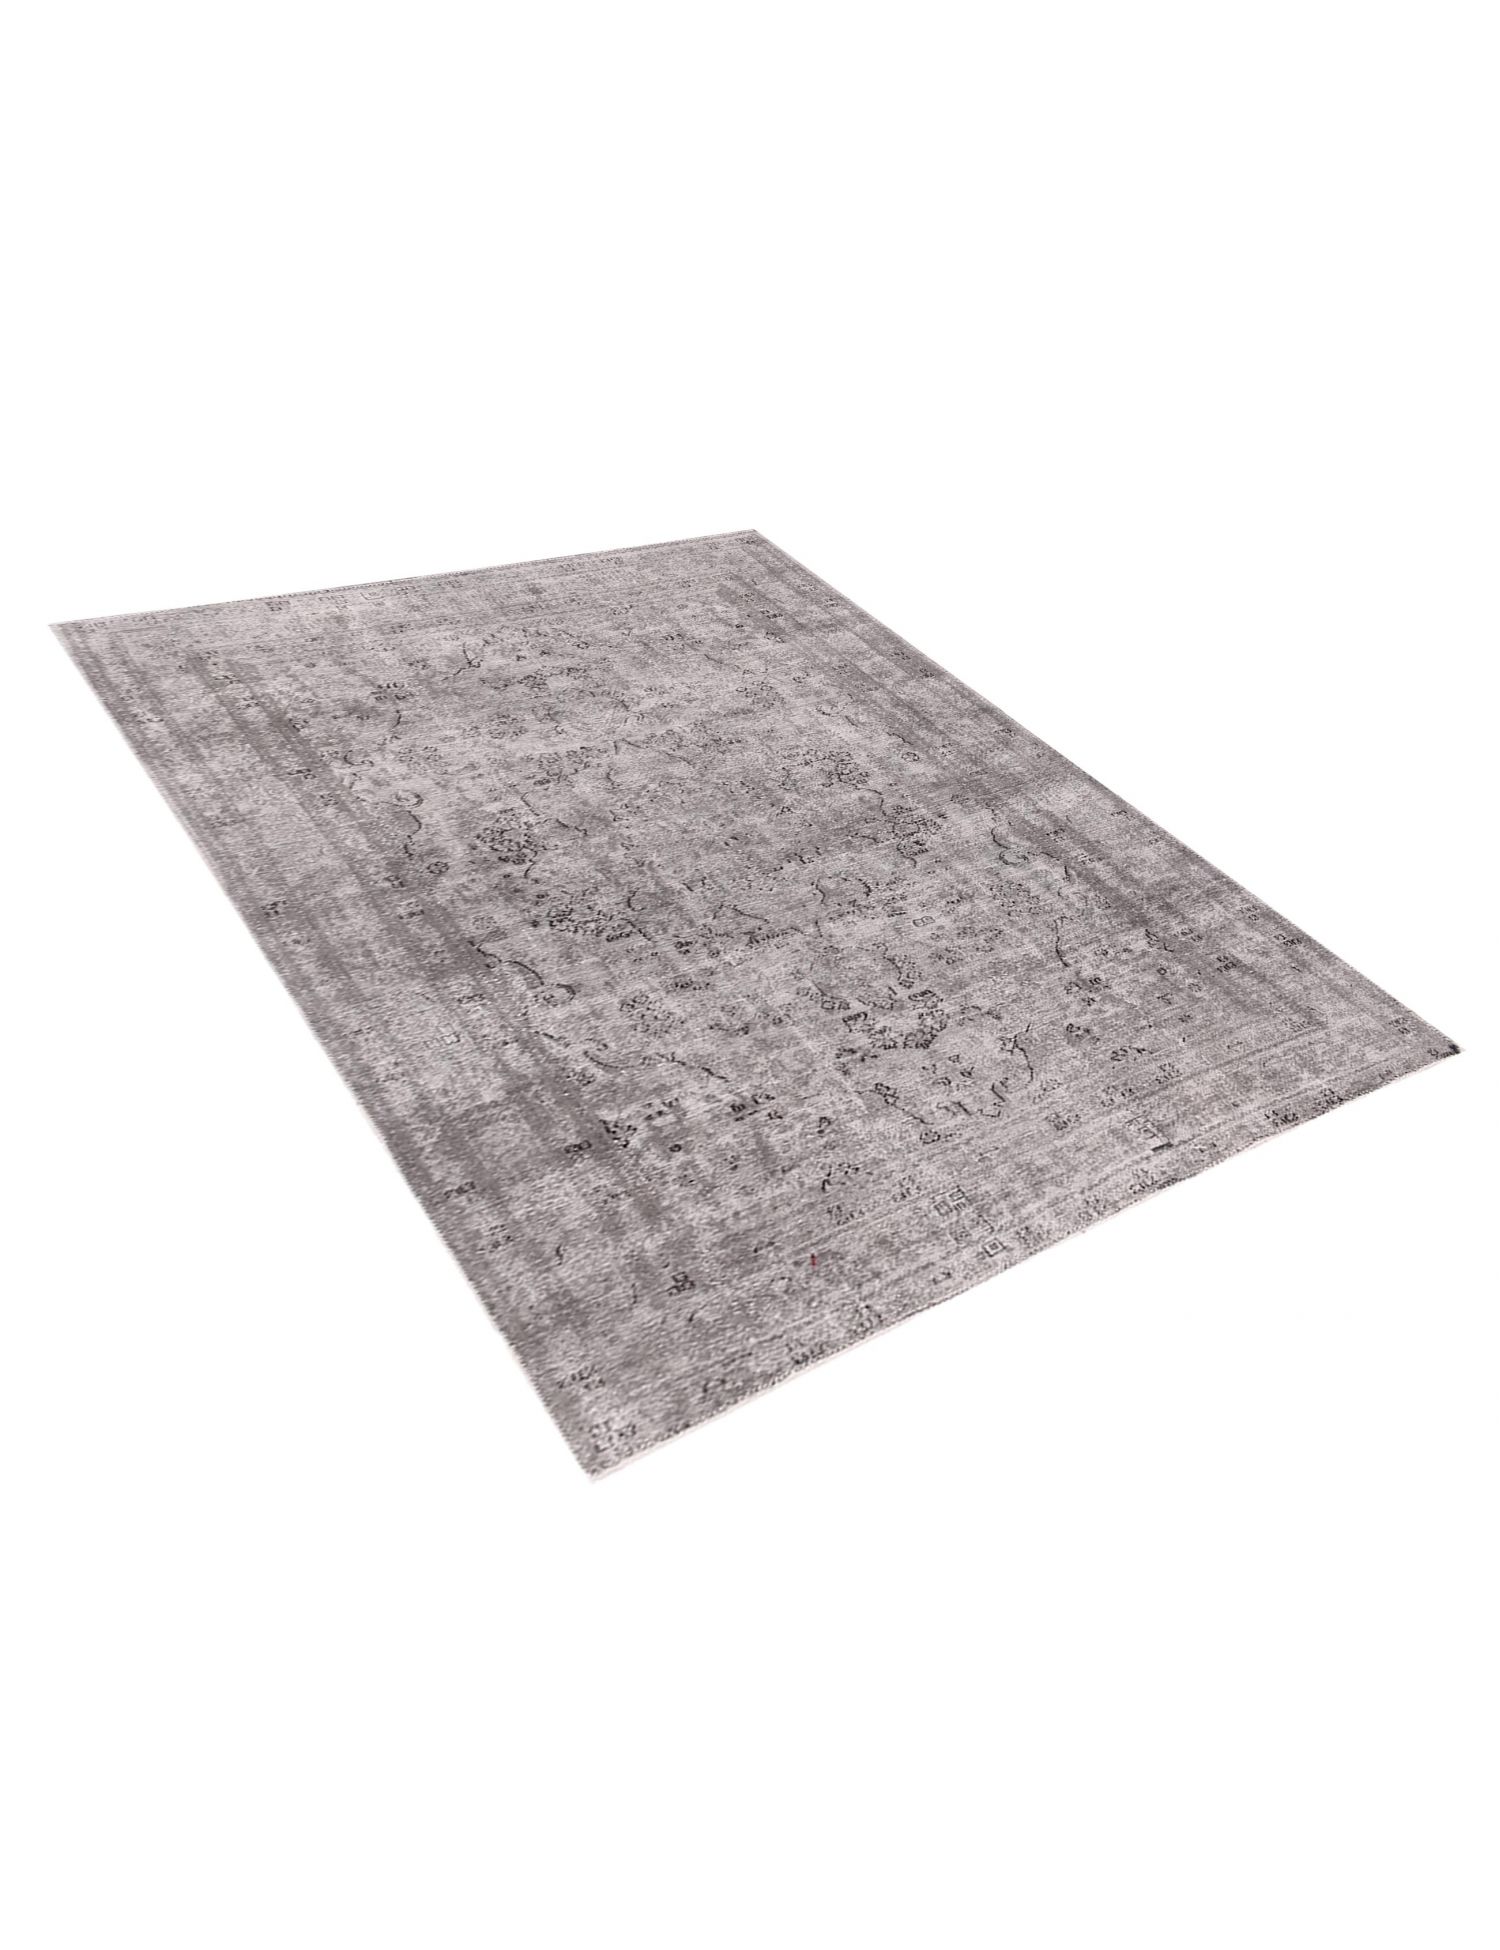 Persian Vintage Carpet  grey <br/>270 x 185 cm